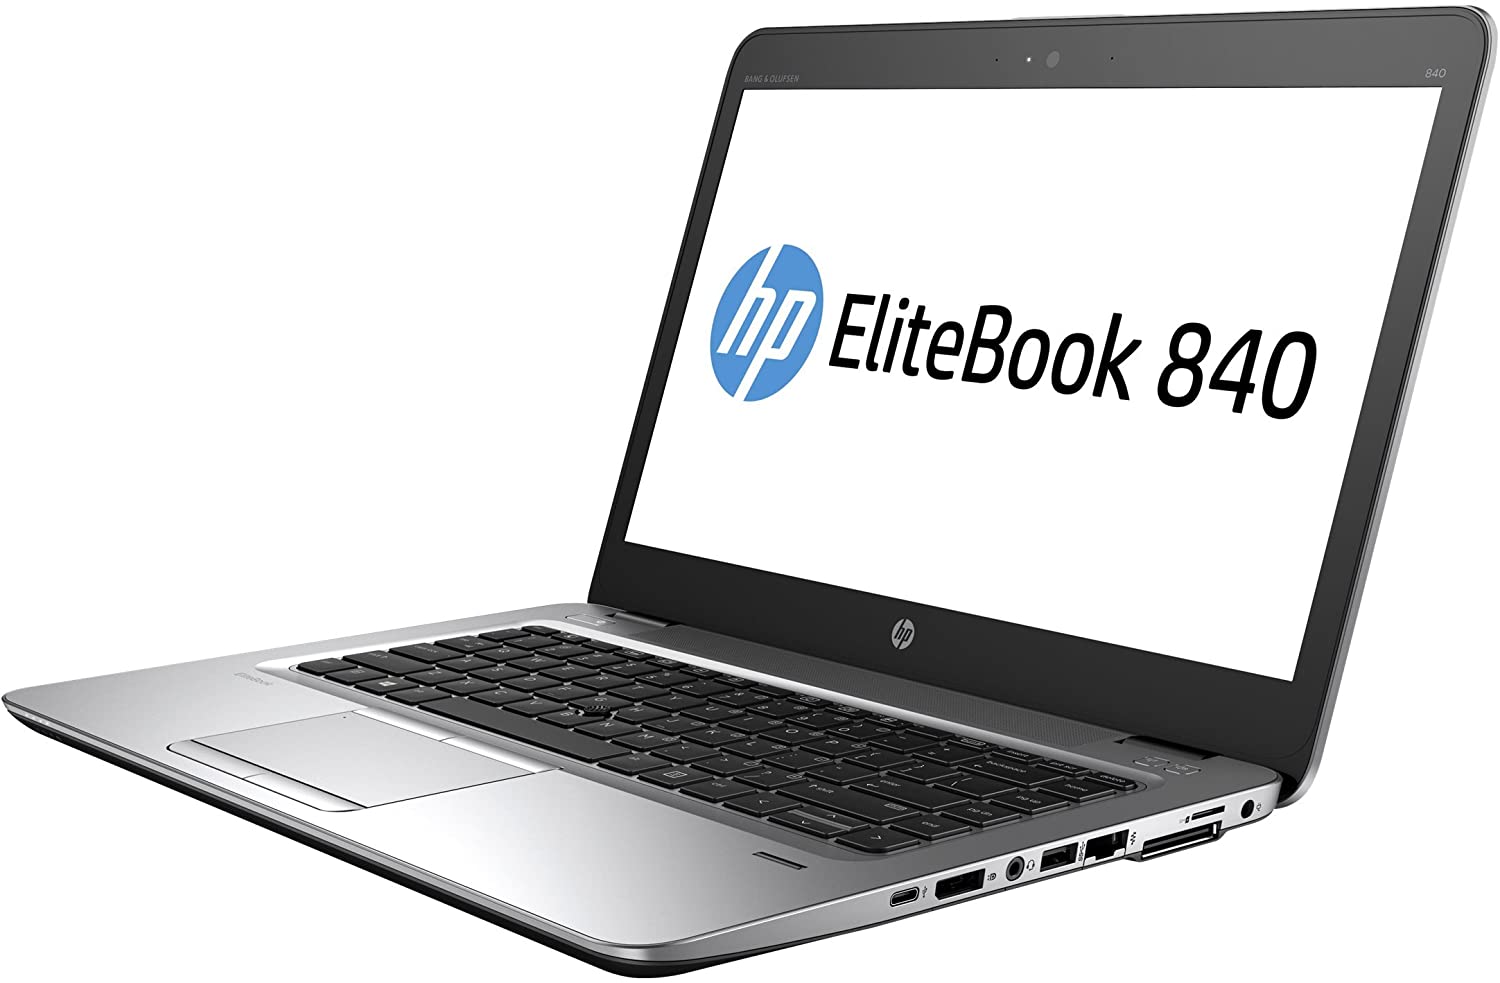 Portátil Ultrabook HP Elitebook 840 G3 GRADO A (Intel Core i7 6600U 2.6Ghz/8GB/256SSD-M.2/14FHD/NO-DVD/W10P) Preinstalado